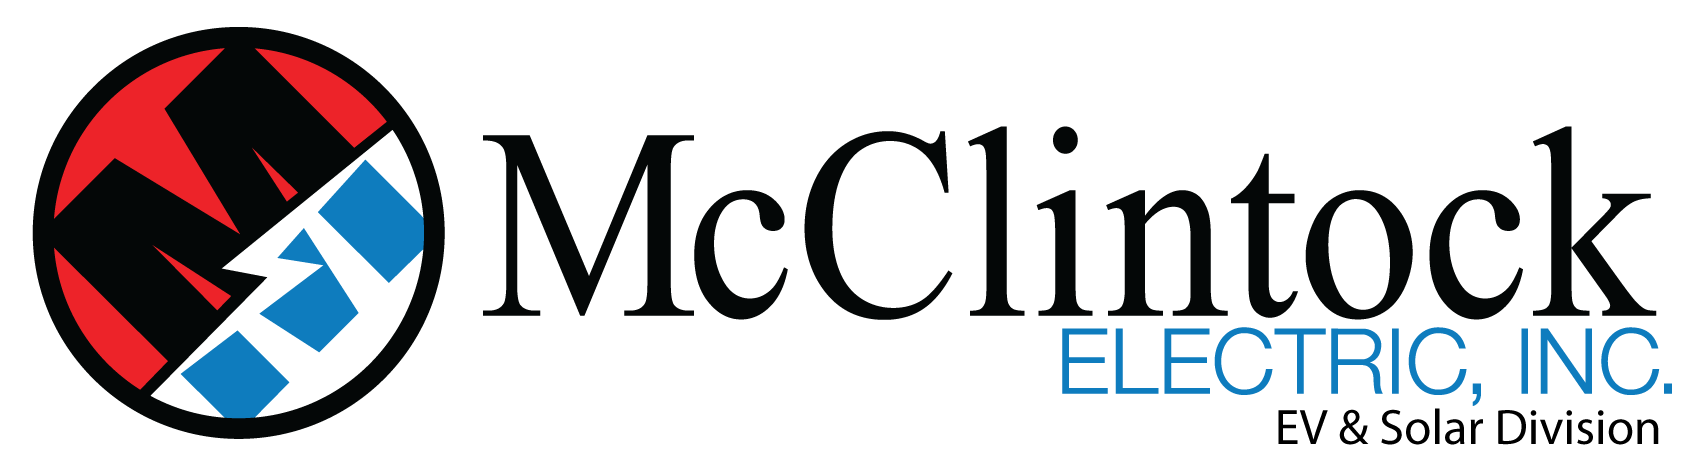 McClintock Electric logo